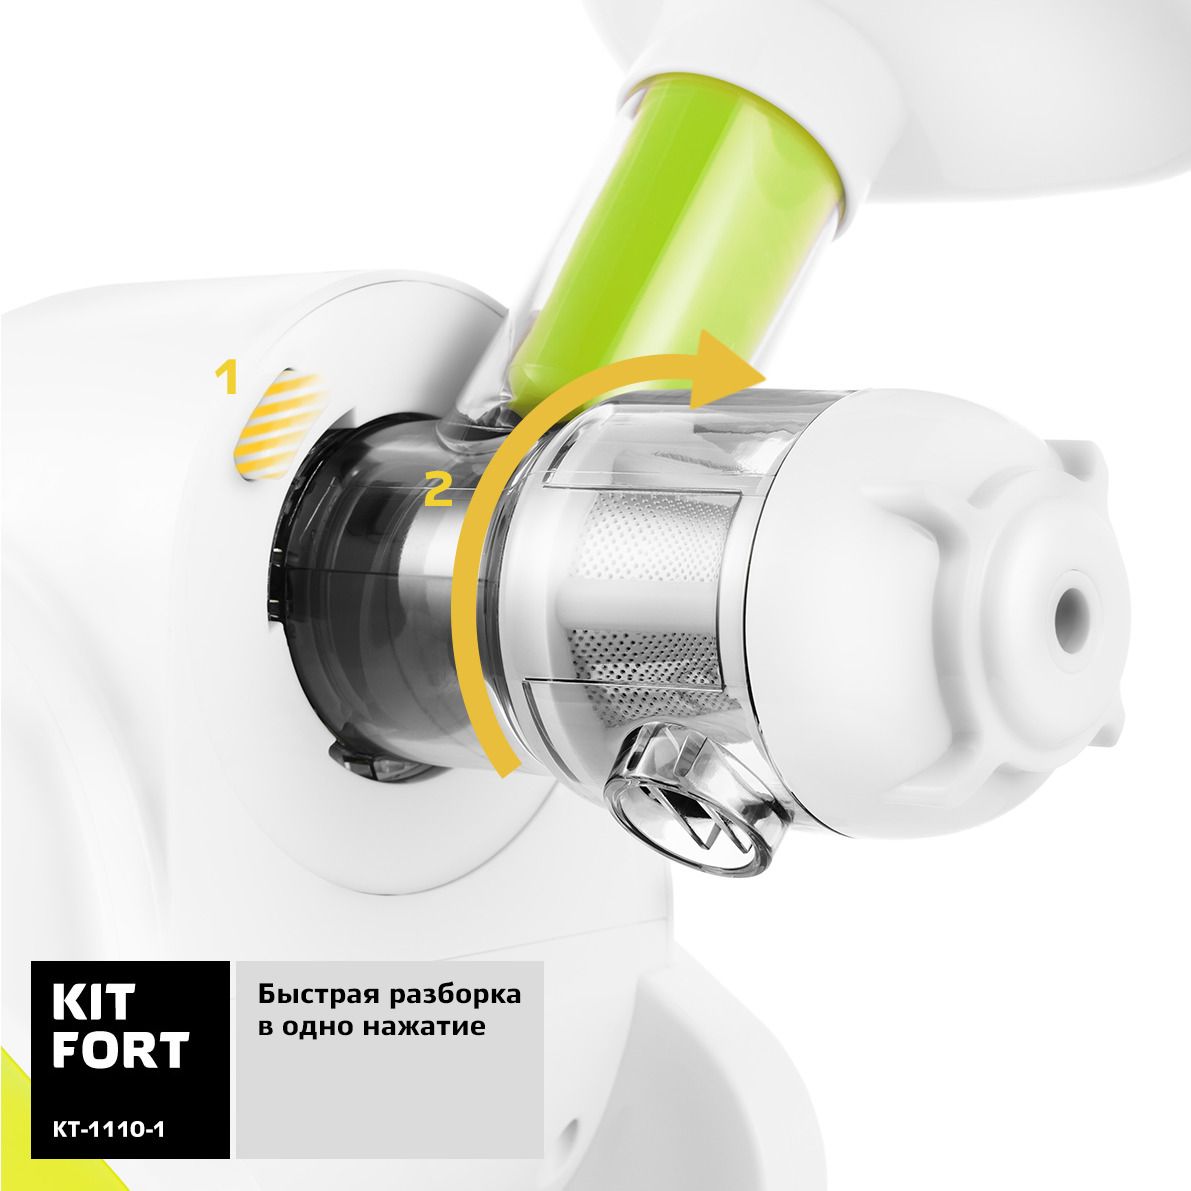  Kitfort -1110-1, 